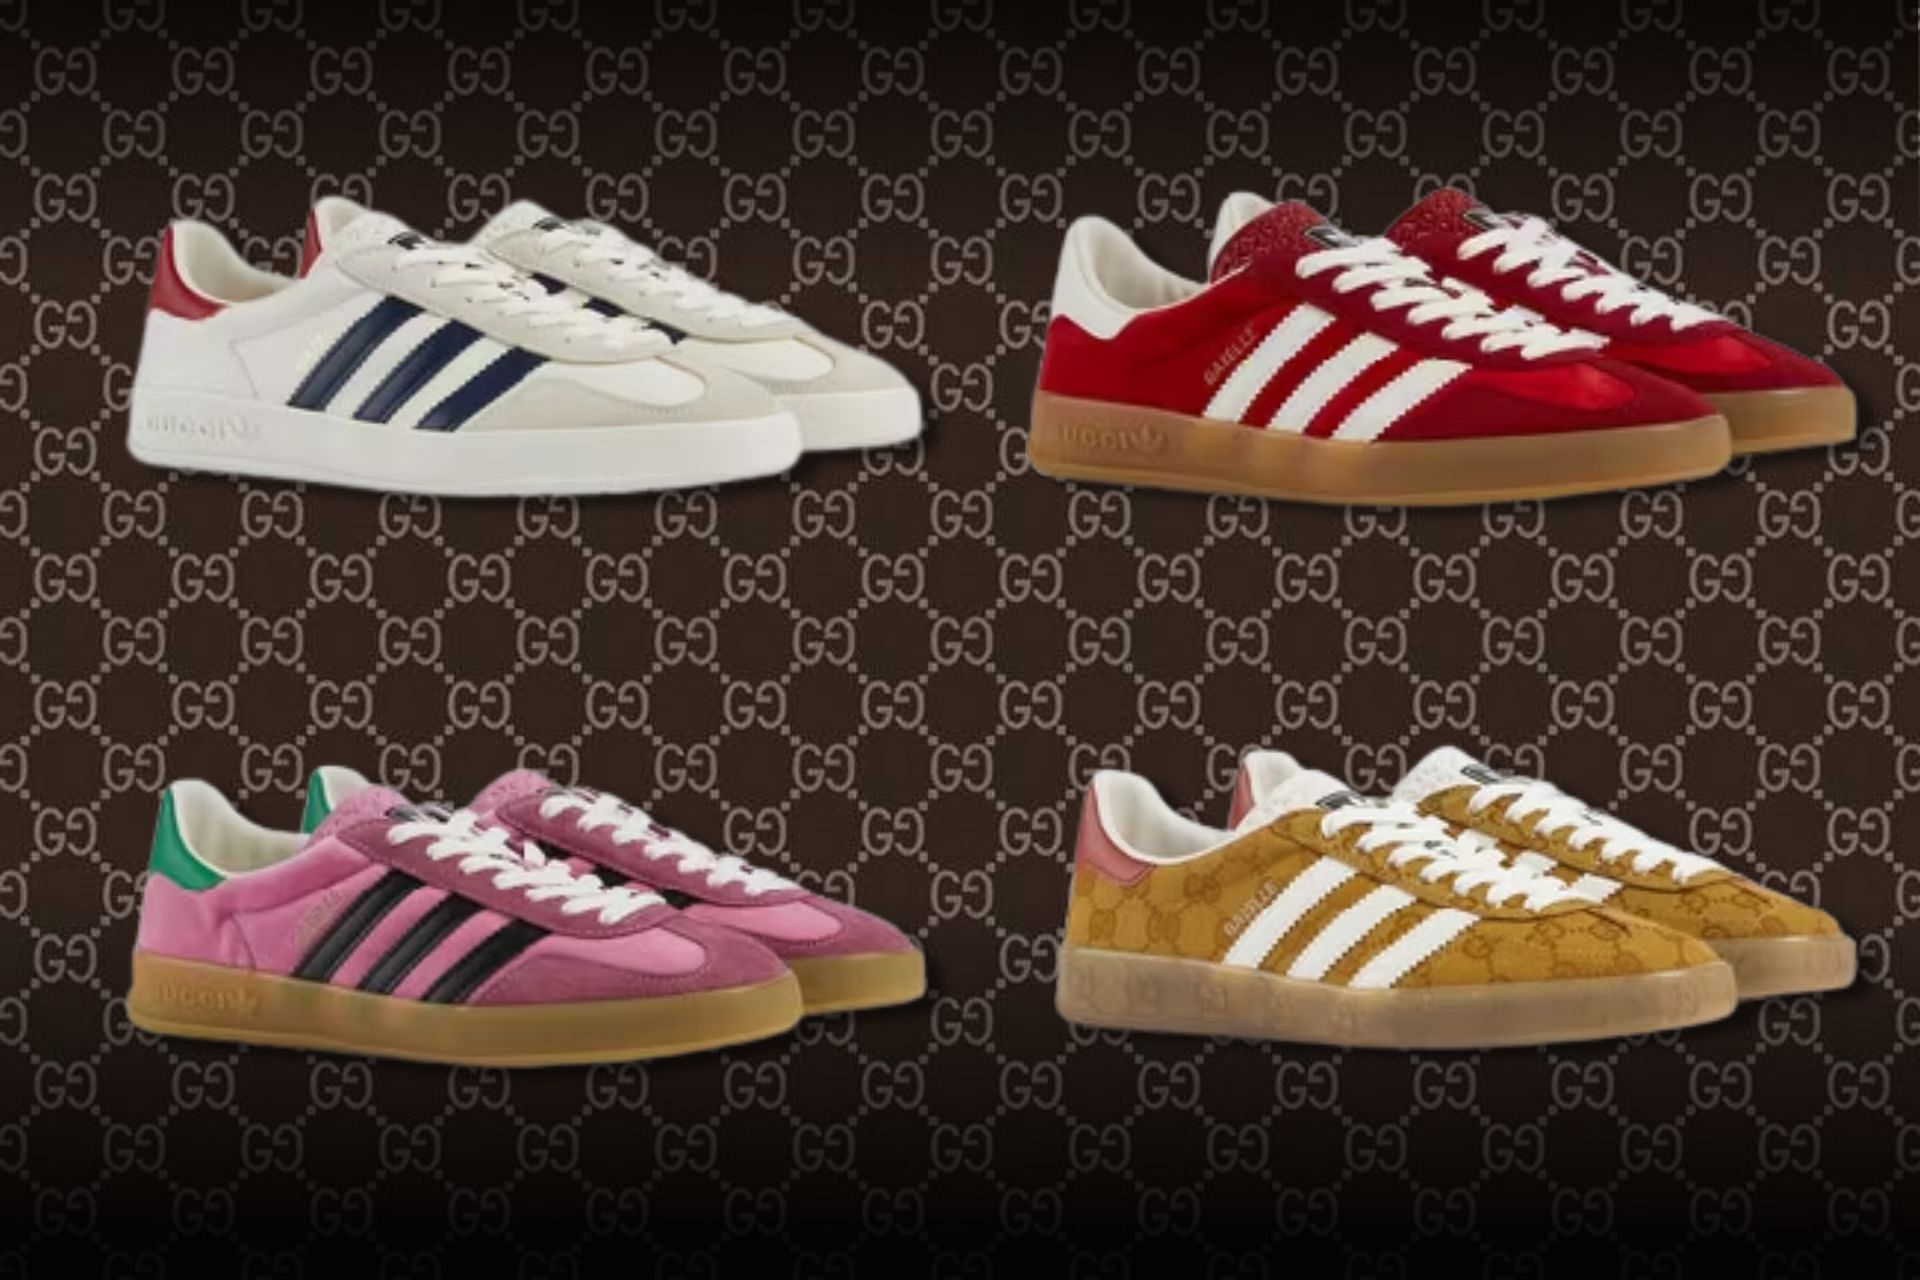 Re-releasing Gucci X Adidas Gazelle footwear collection (Image via Sportskeeda)